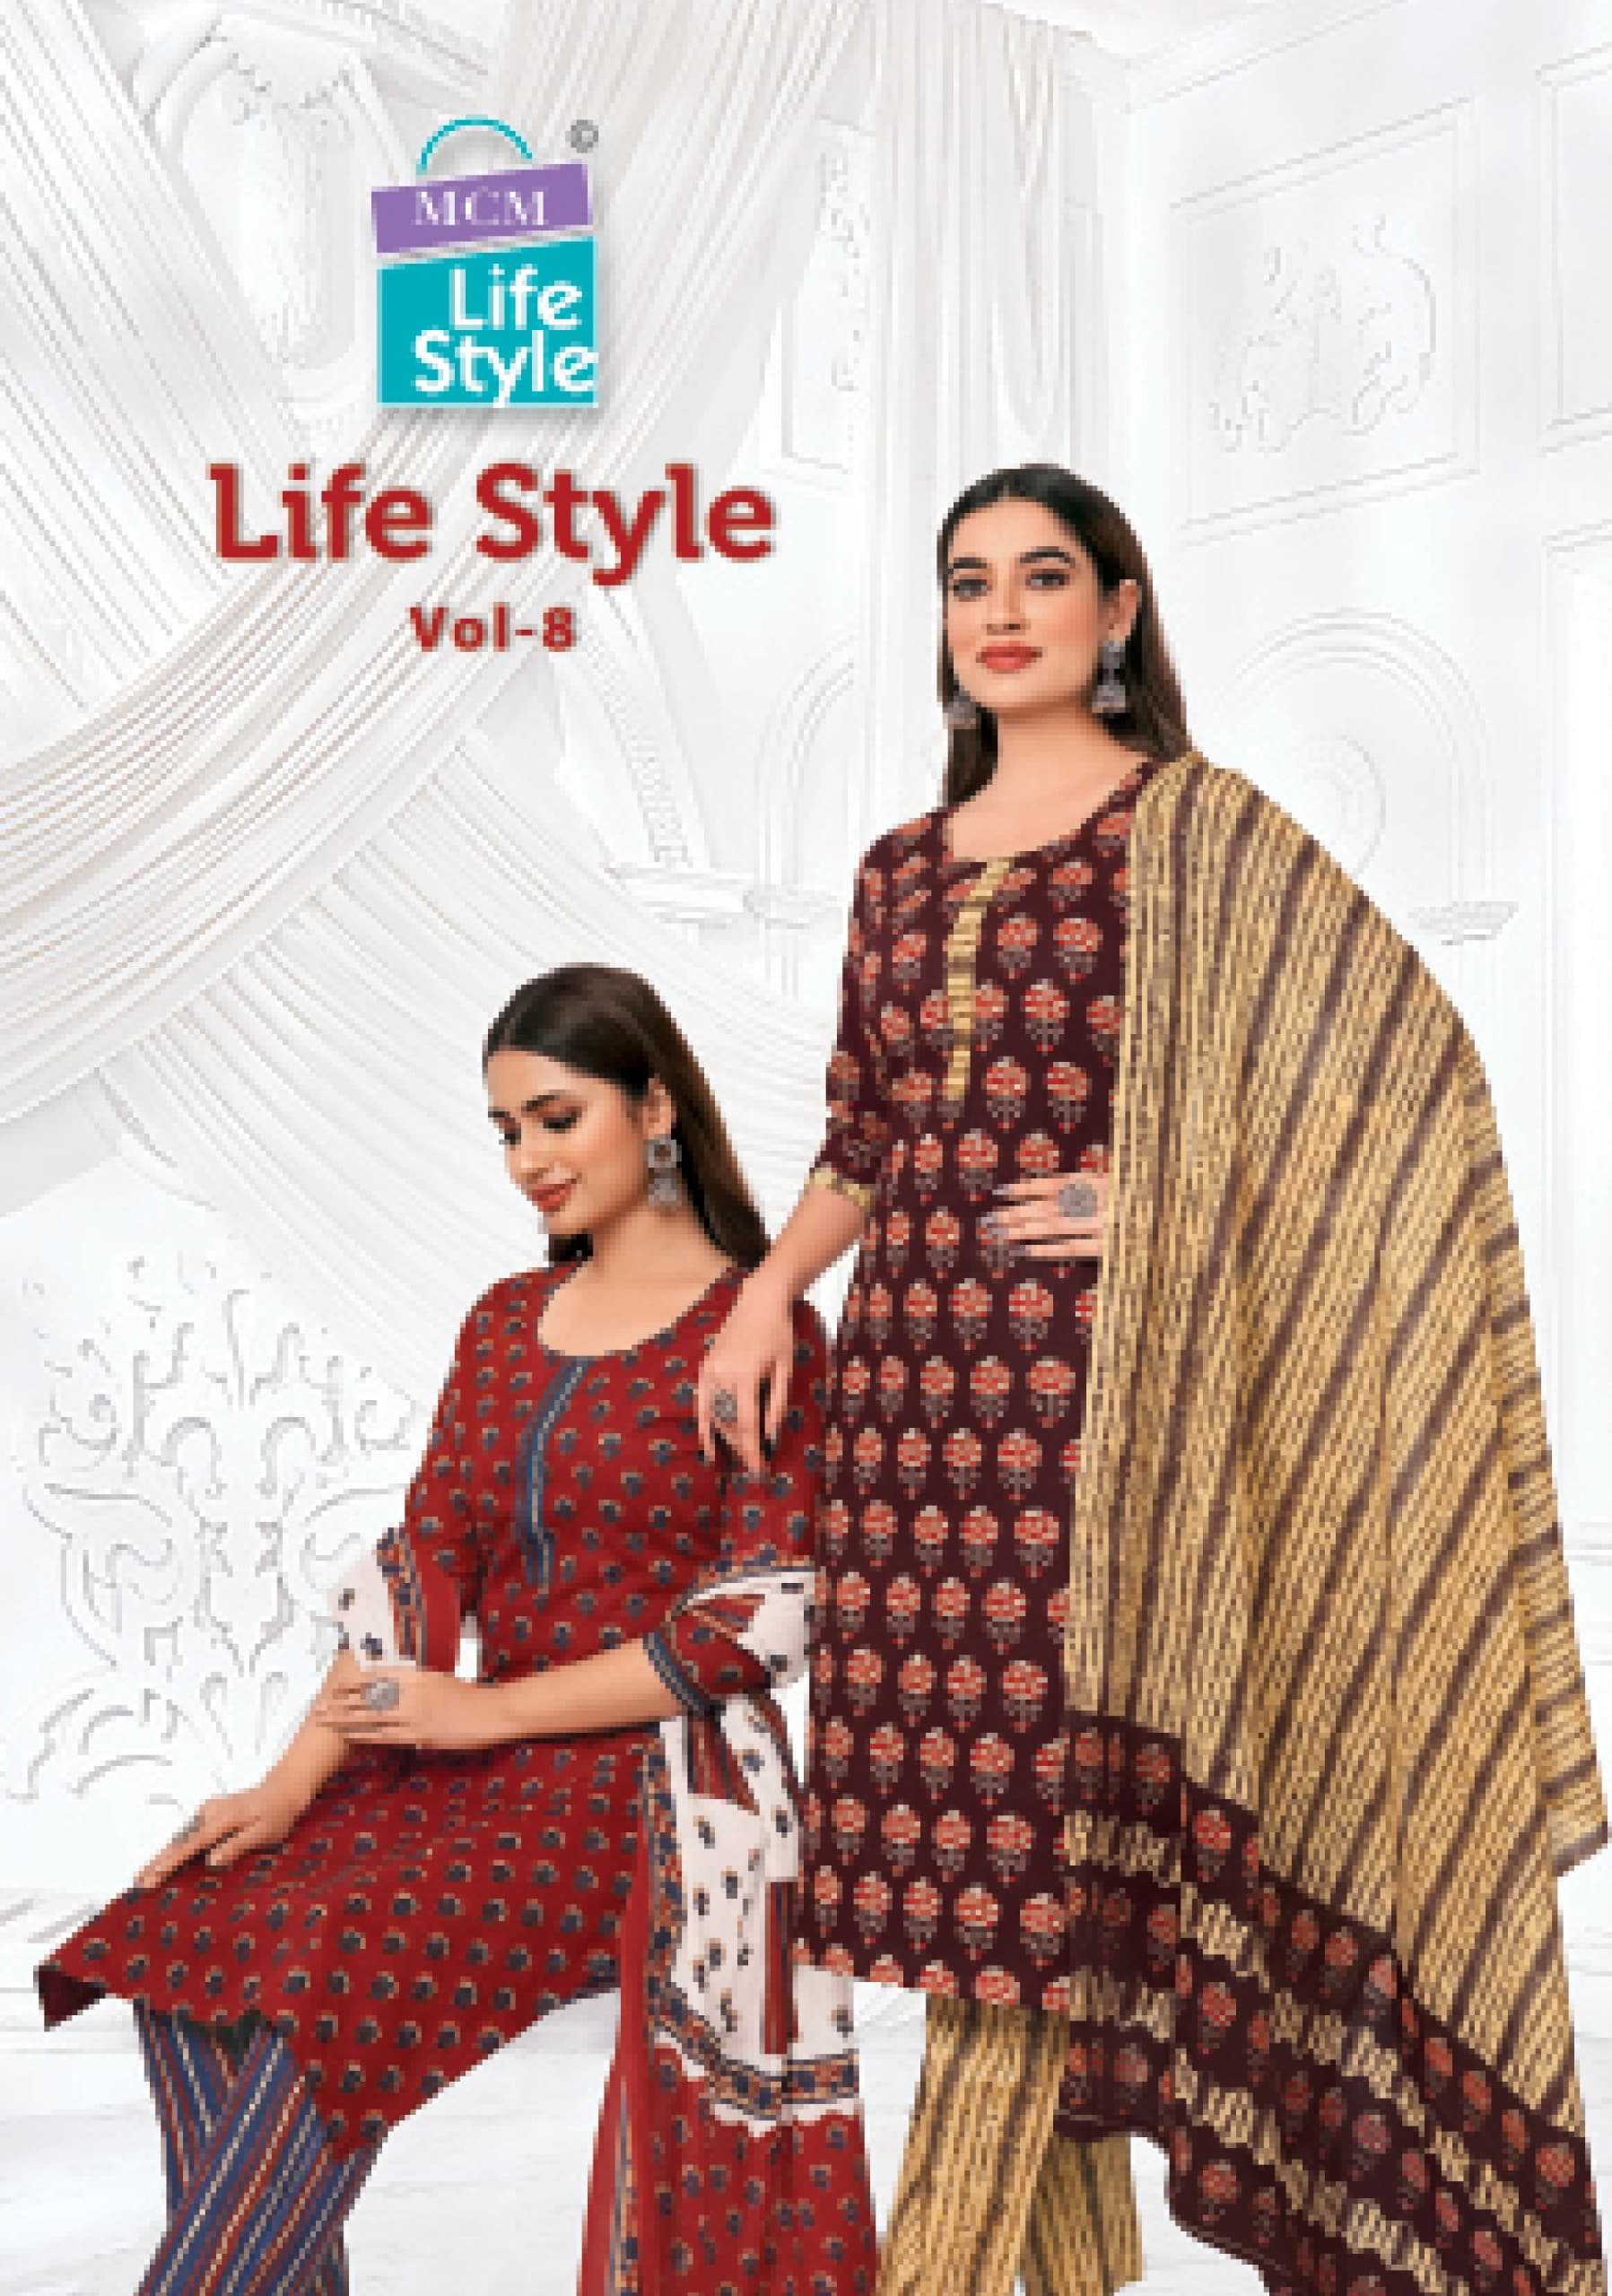 mcm lifestyle vol 8 readymade casual wear salwar kameez plus size